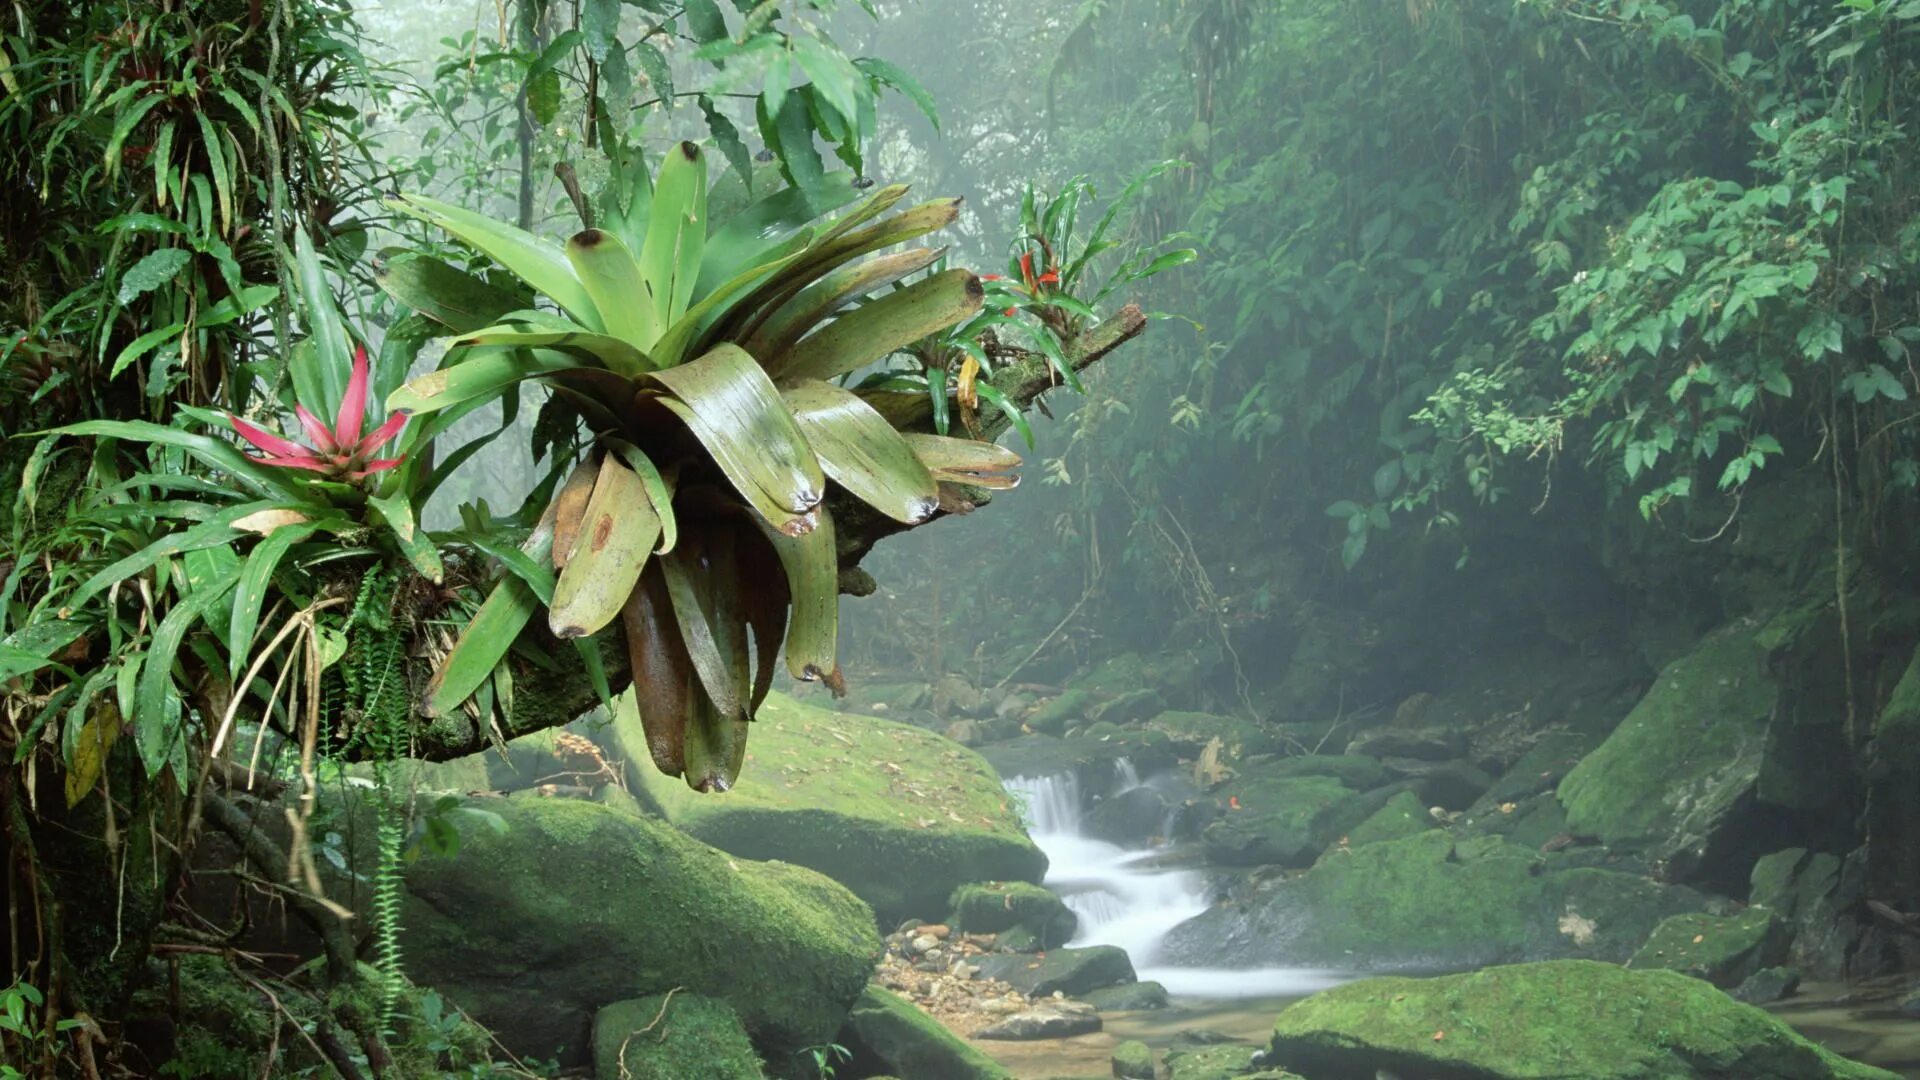 Rainforest plants. Амазонские джунгли Бразилия. Бразилия тропические леса Сельва. Сельва Южной Америки орхидеи.